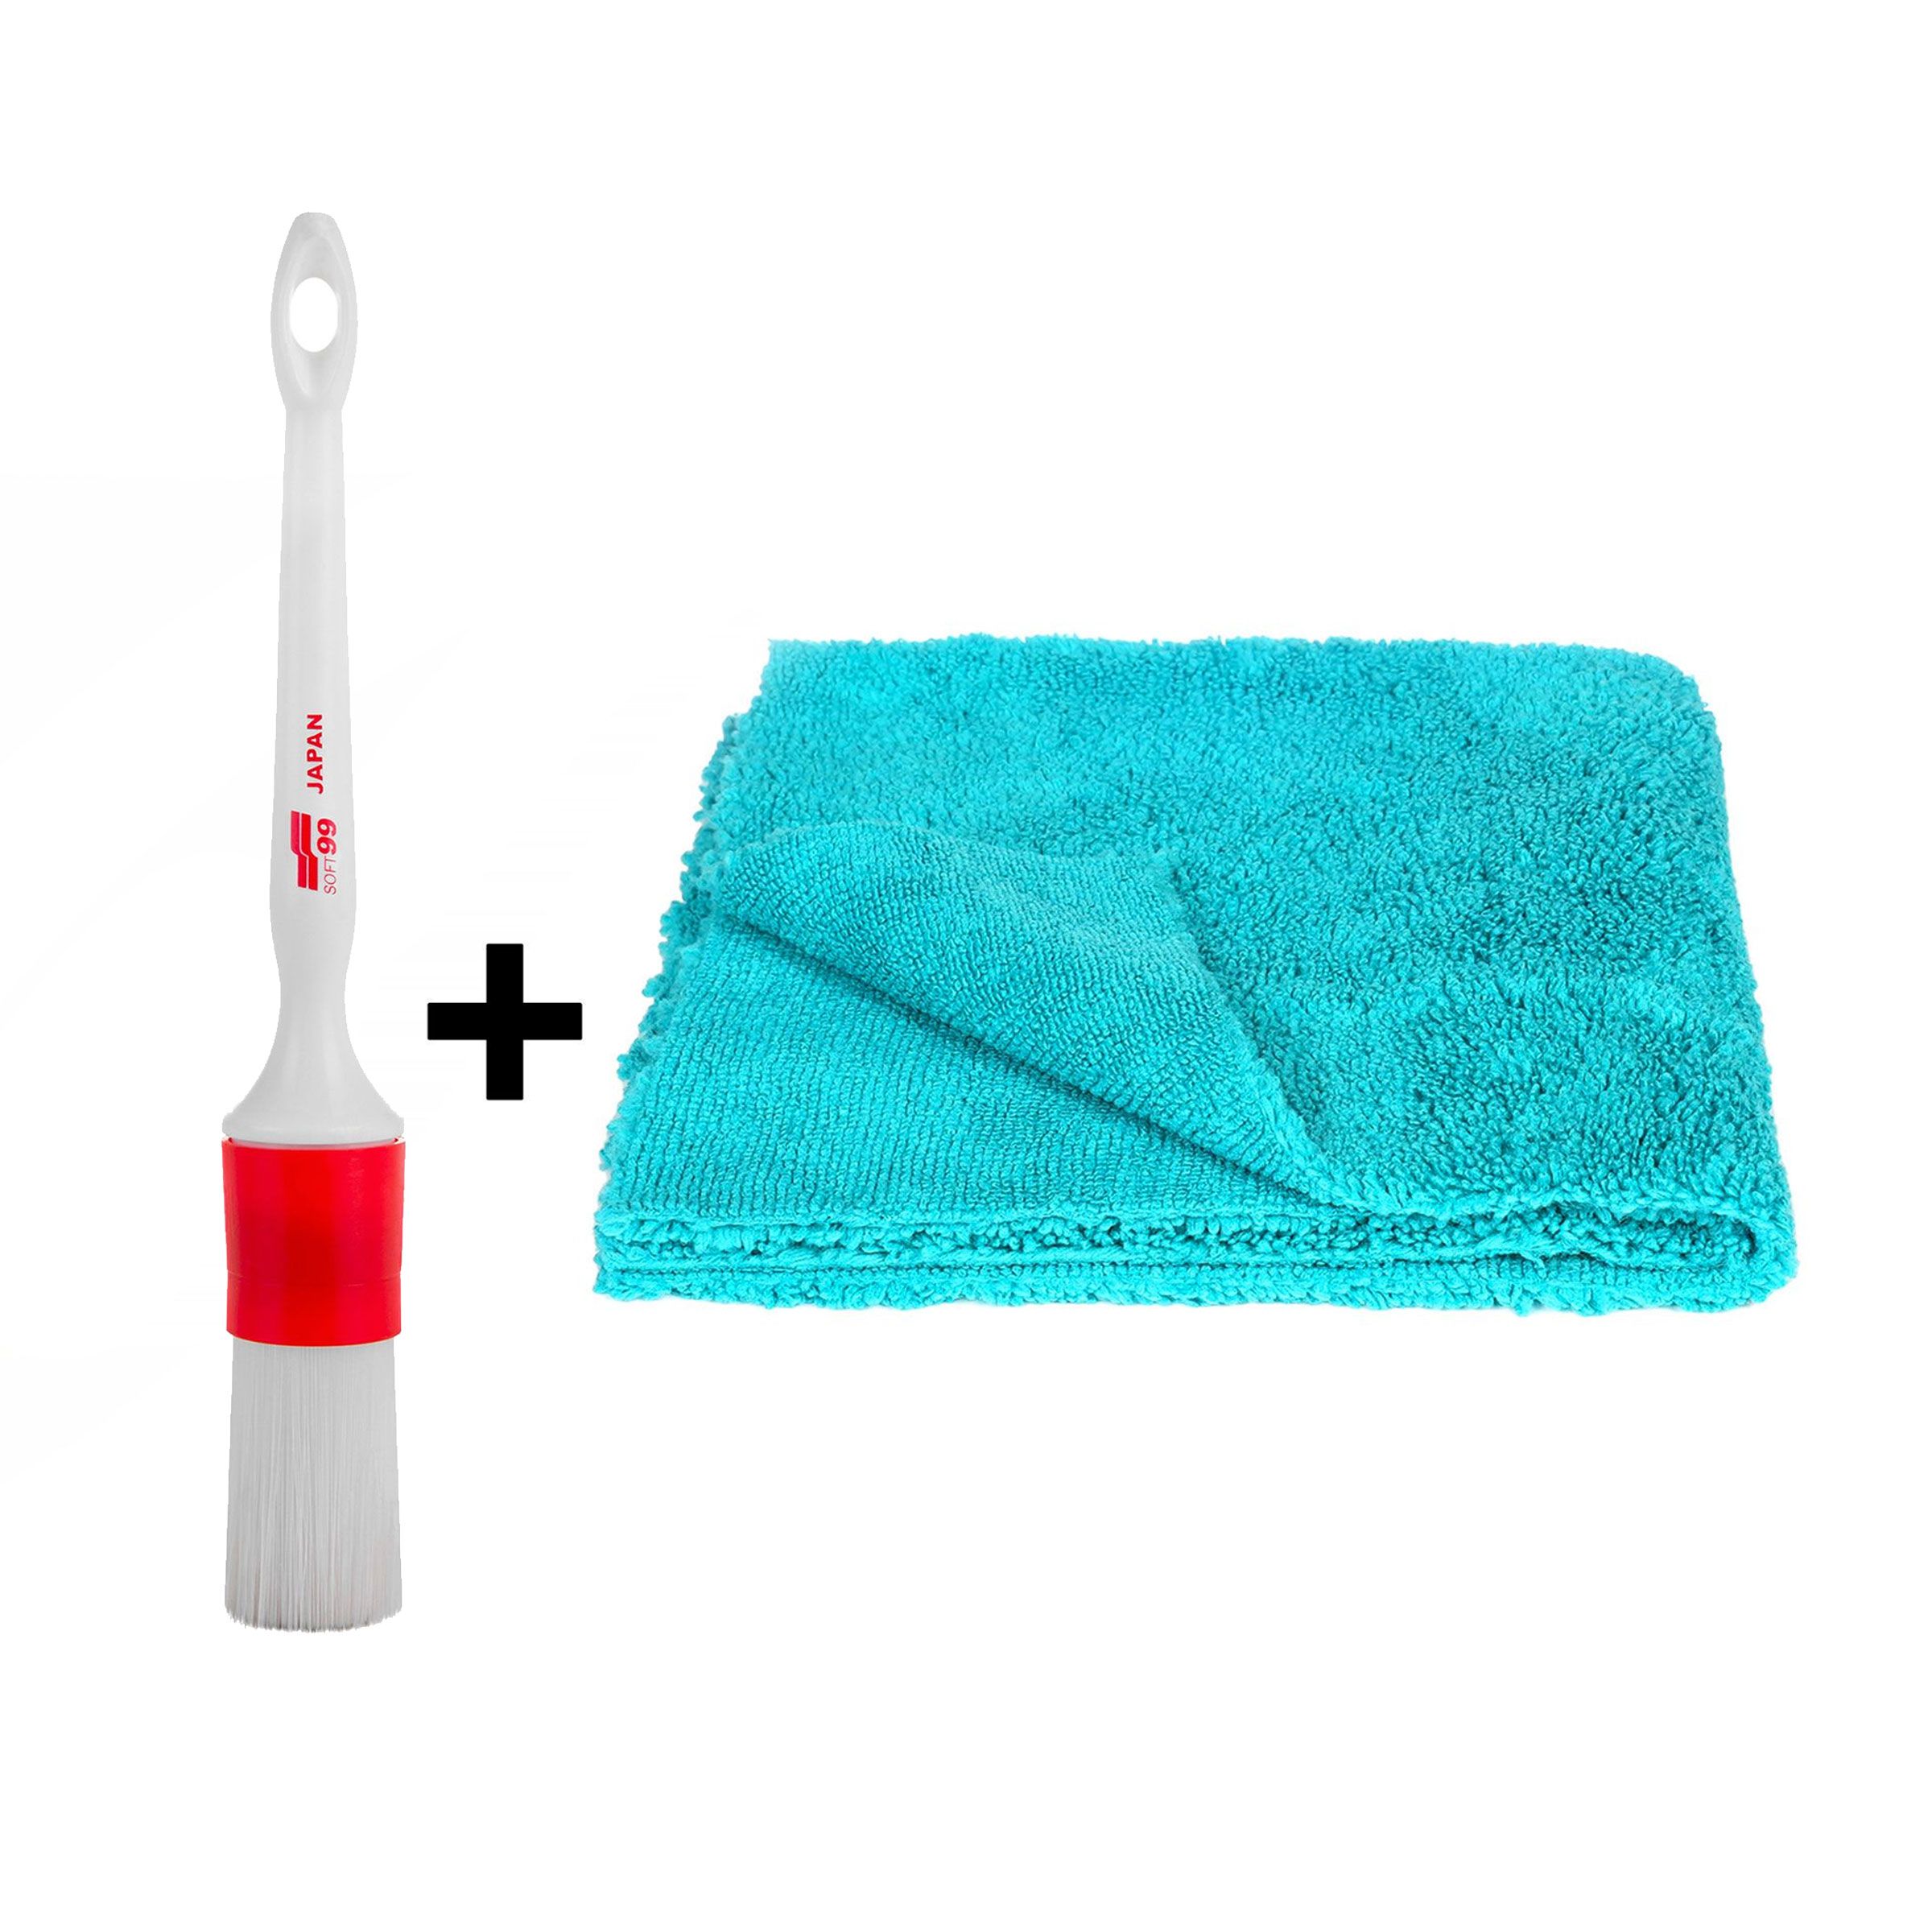 Rengjøringsbørste Soft99 Detailing brush (Exterior), 24 mm Børste + Mikrofiberklut CAR5 All-purpose Towel